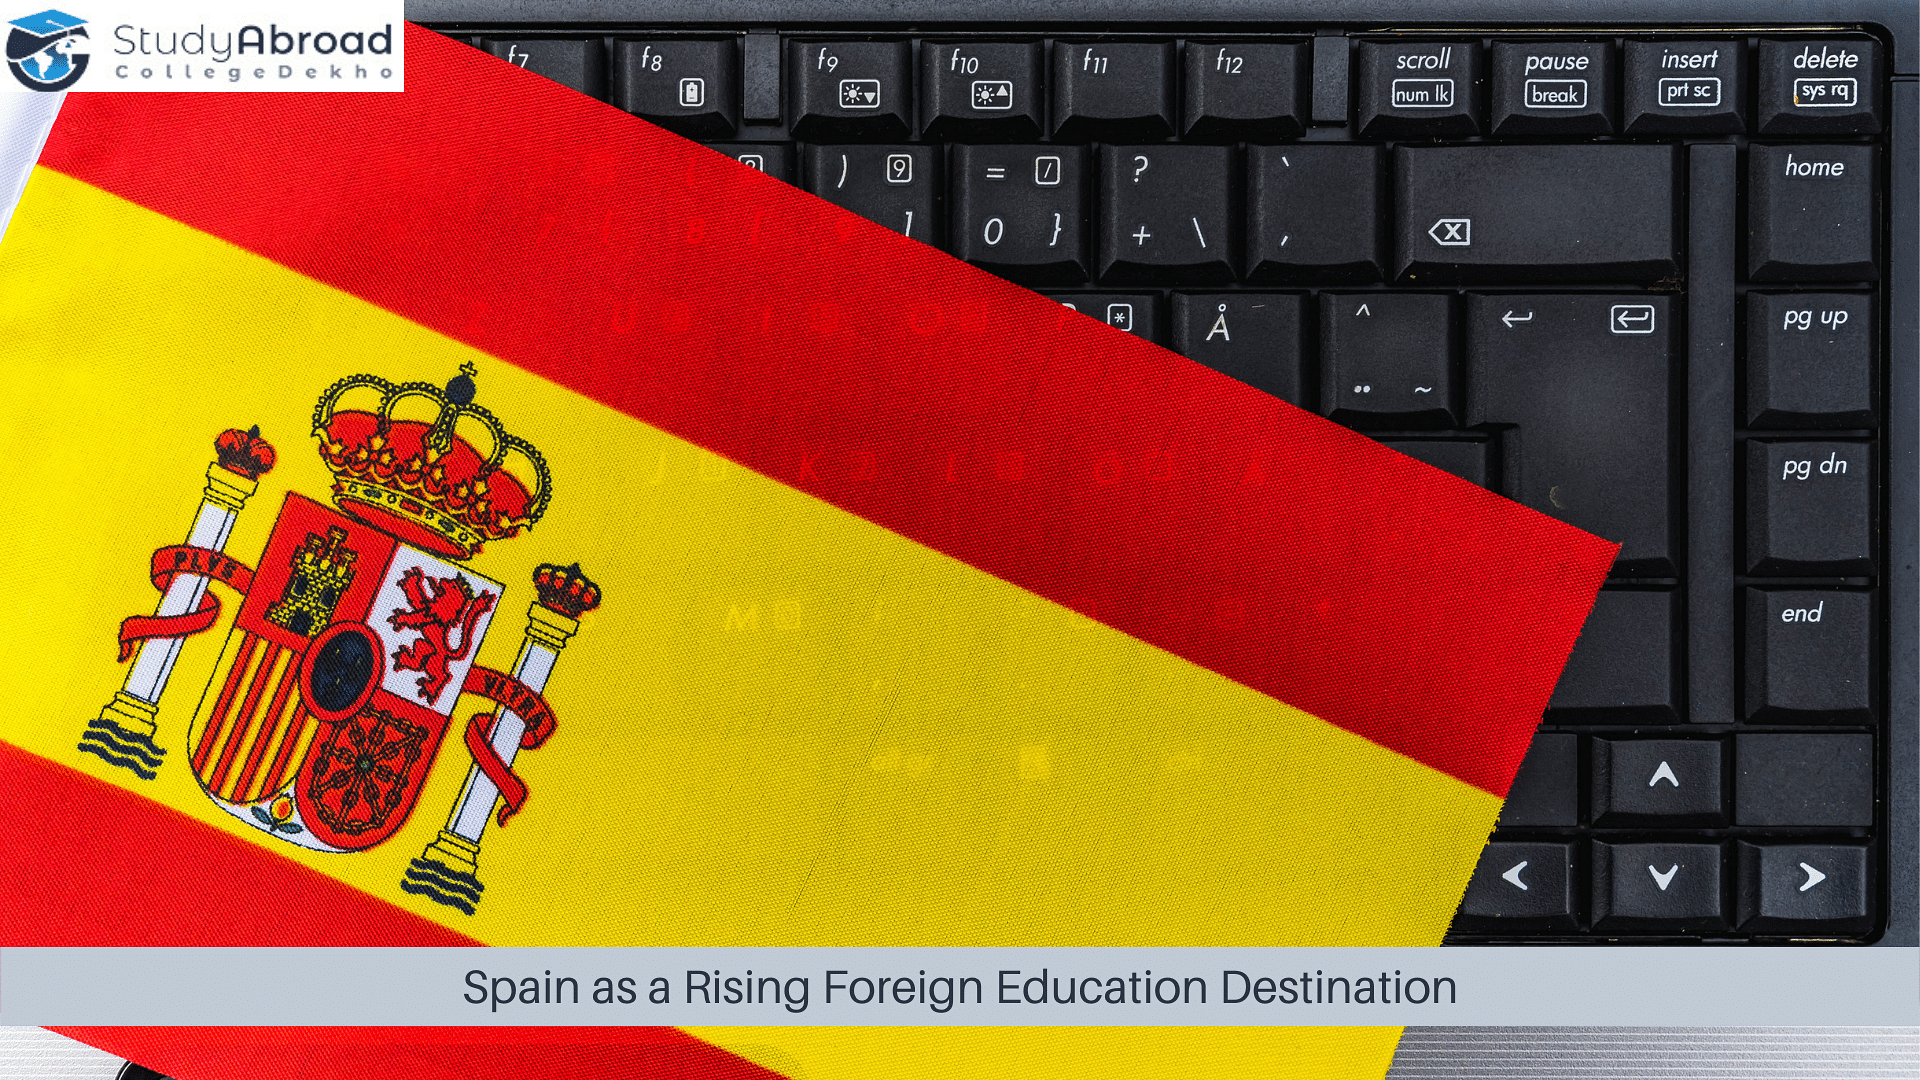 Spain, an 'Emerging Study Abroad Destination'